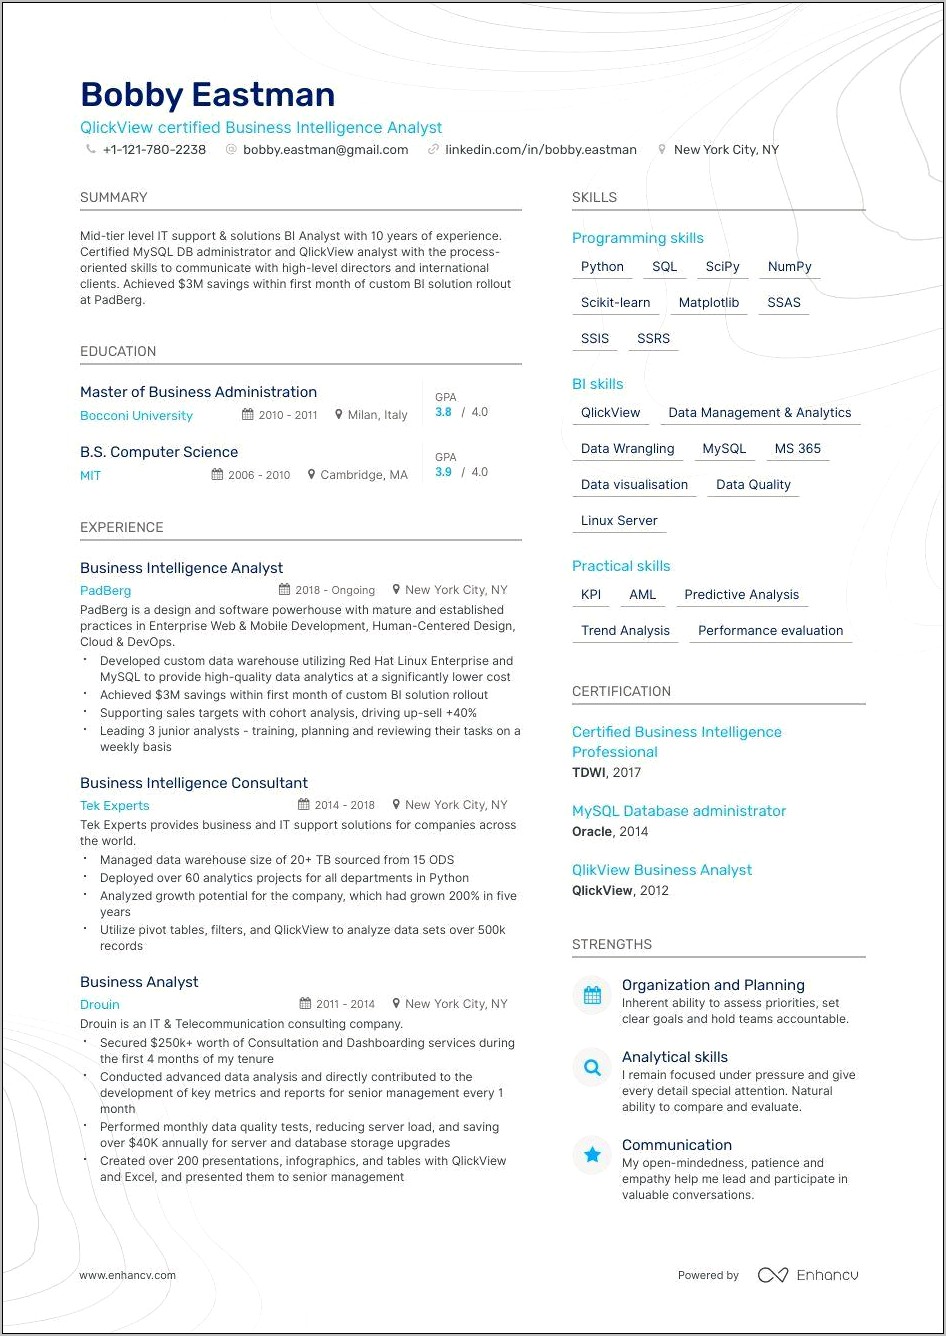 Business Intelligence Manager Sample Resume